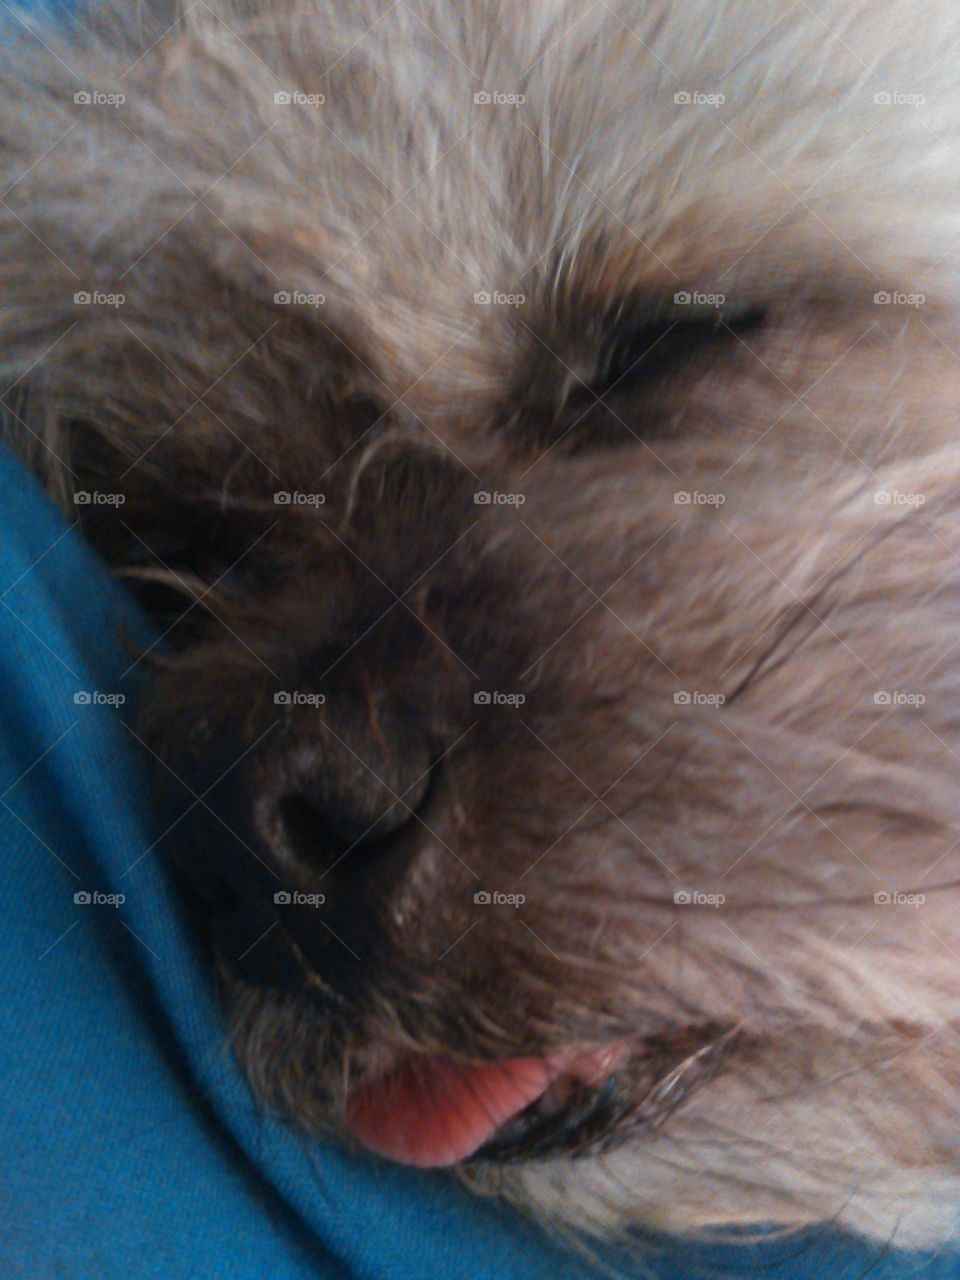 Close-up of old dog sleeping